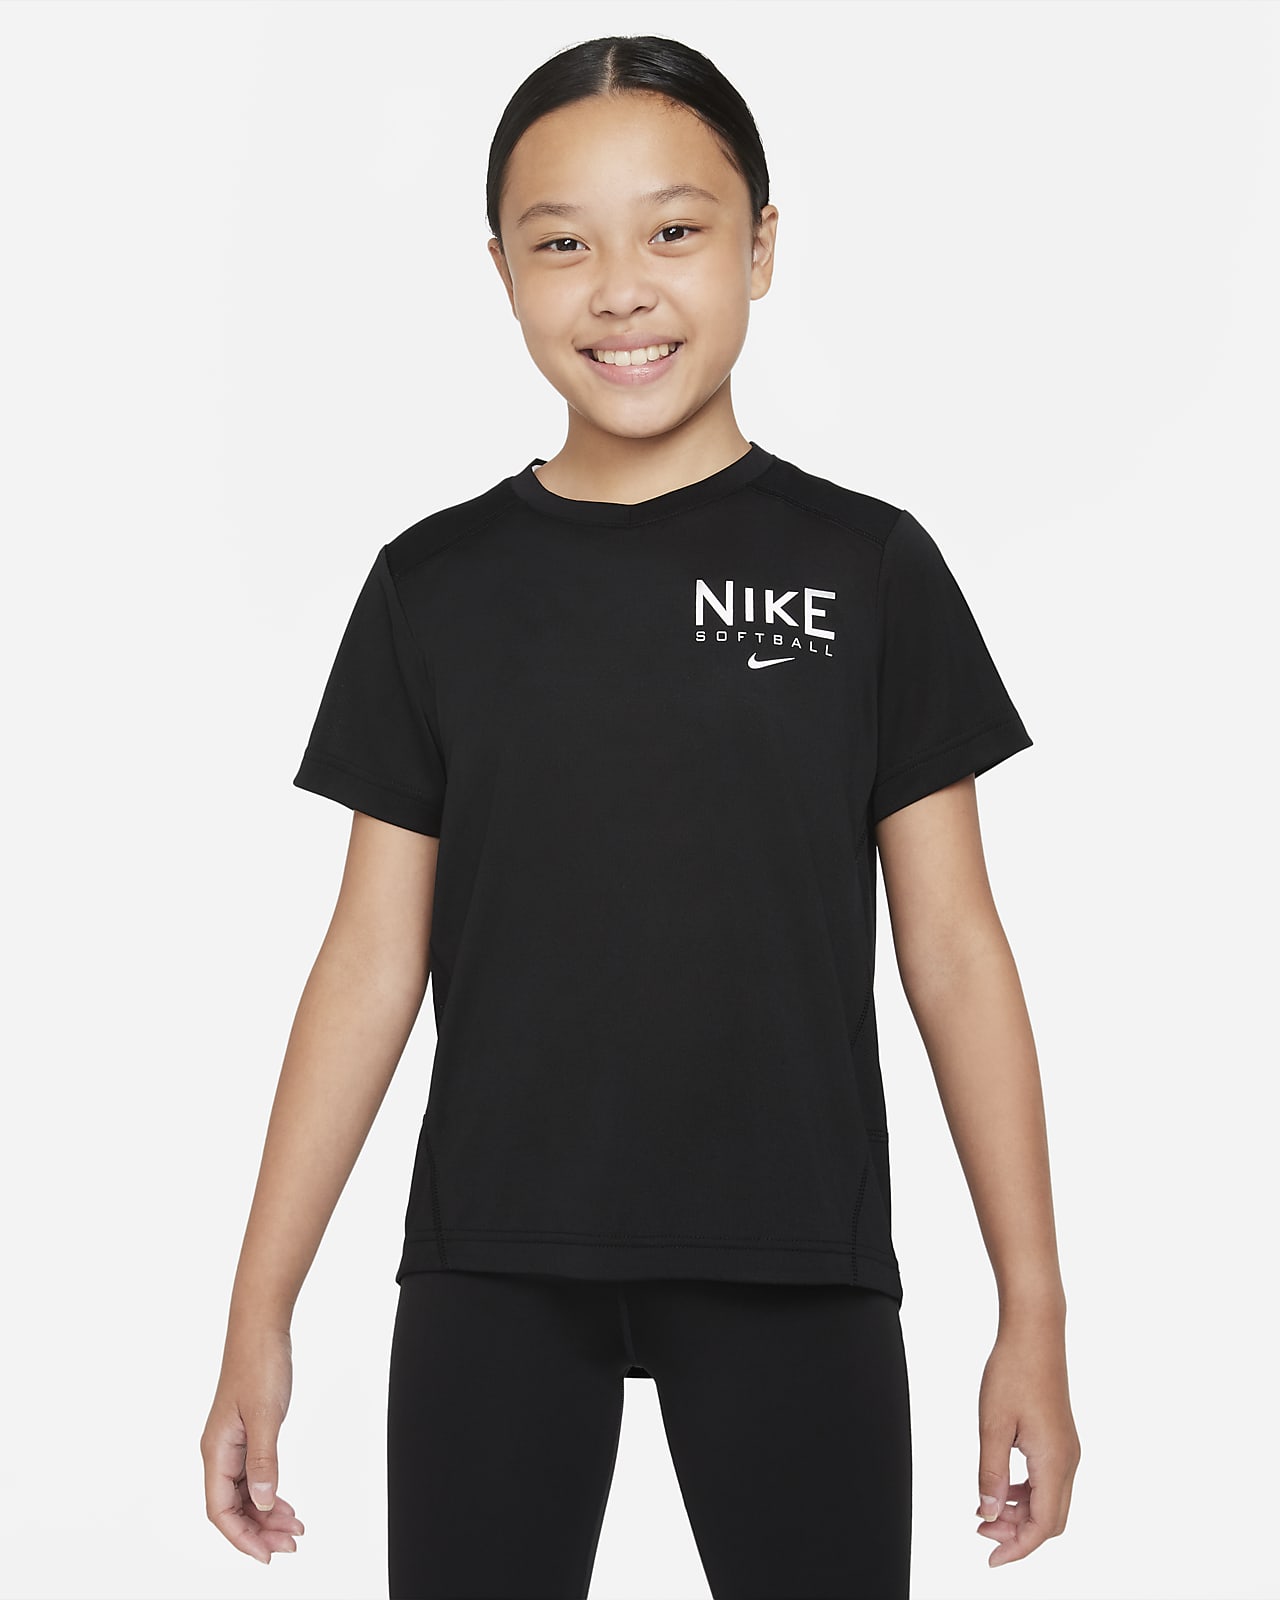 Big Kids\' Practice Nike Dri-FIT Short-Sleeve Top. (Girls\') Softball